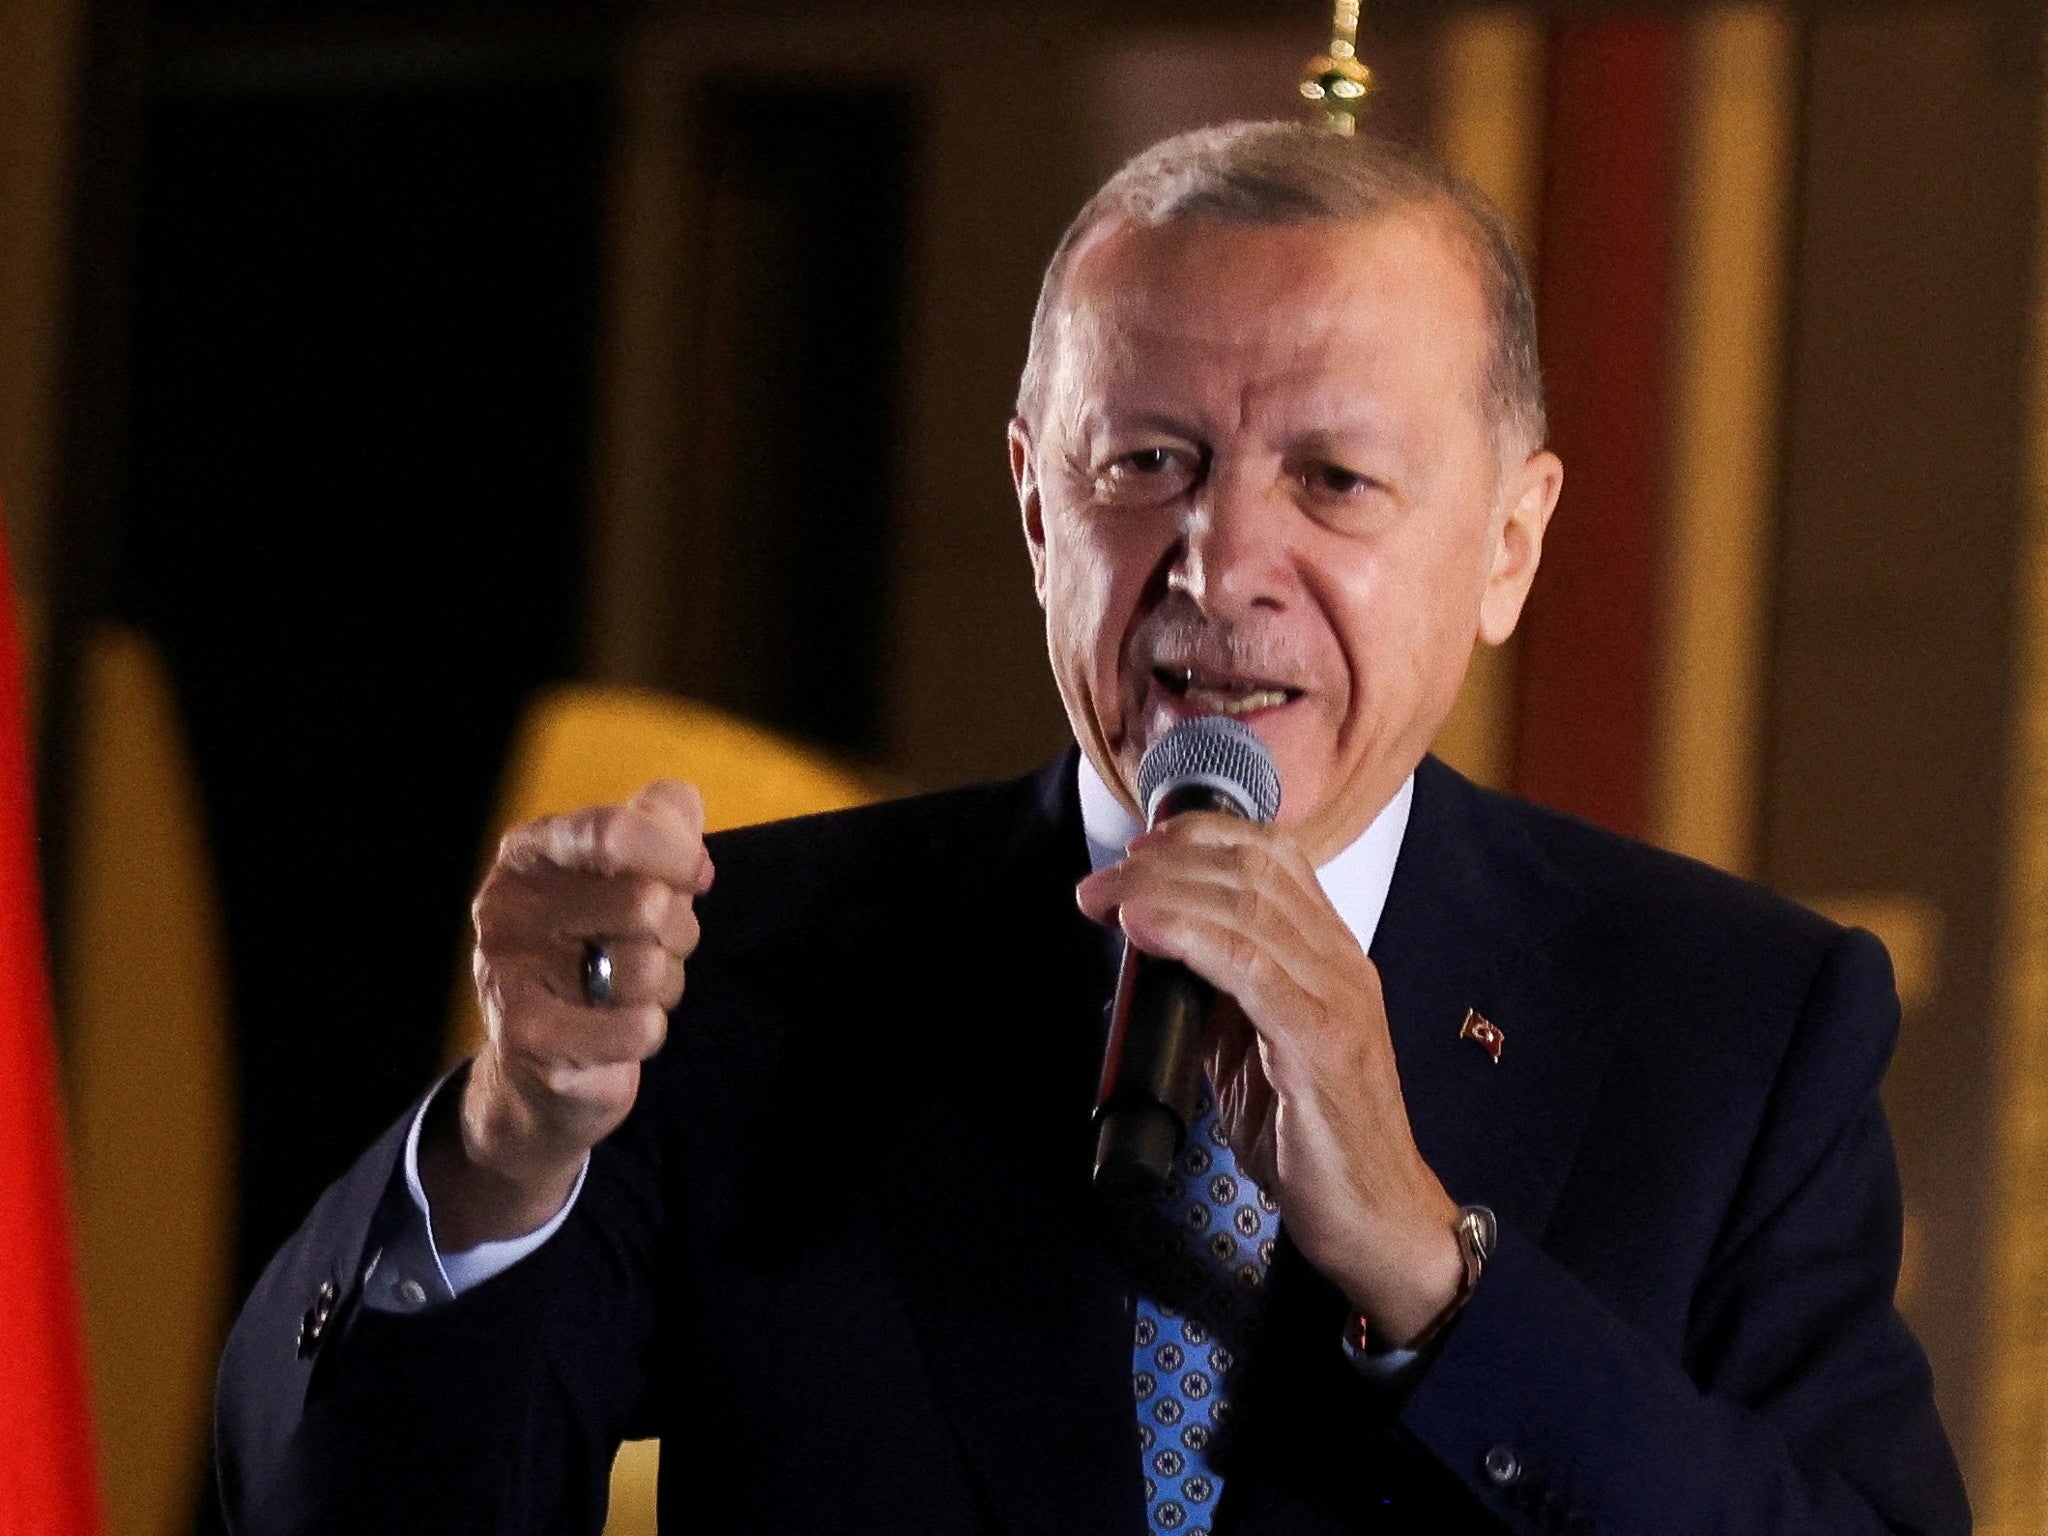 Turkey’s President Recep Tayyip Erdogan in the wake of his election win